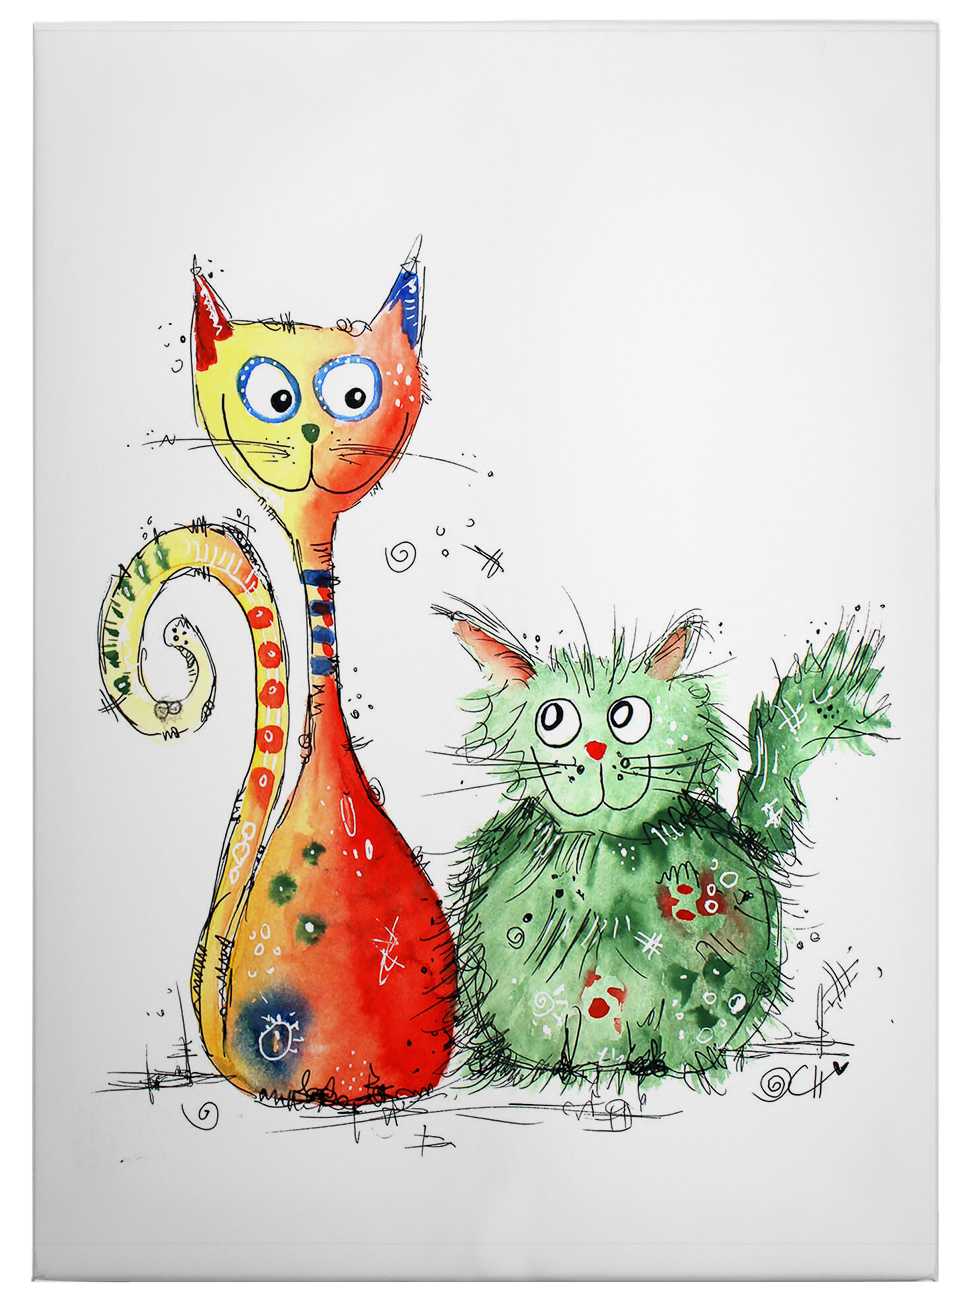             Hagenmeyer canvas foto beste vrienden, kleurrijke katten - 0,50 m x 0,70 m
        